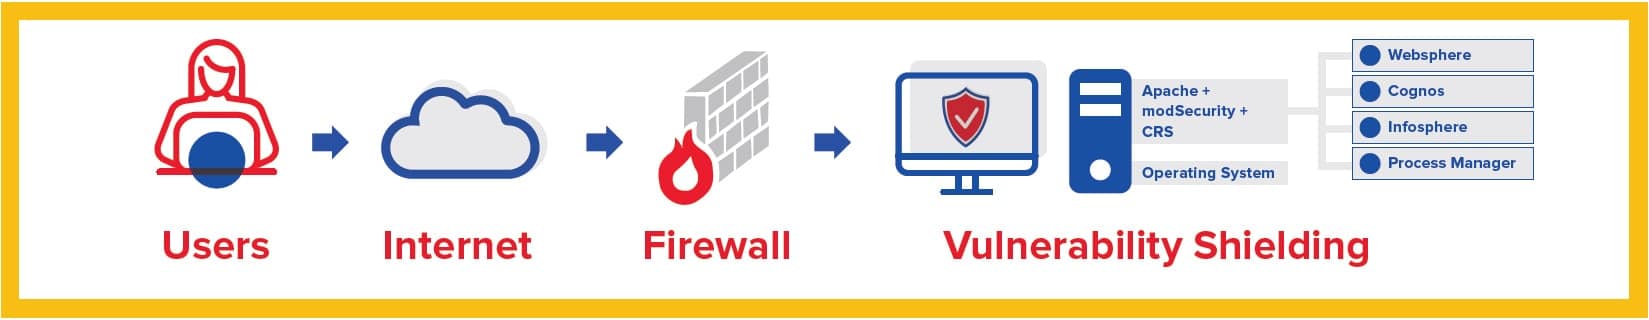 Vulnerability Shielding - Reverse Proxy Mode